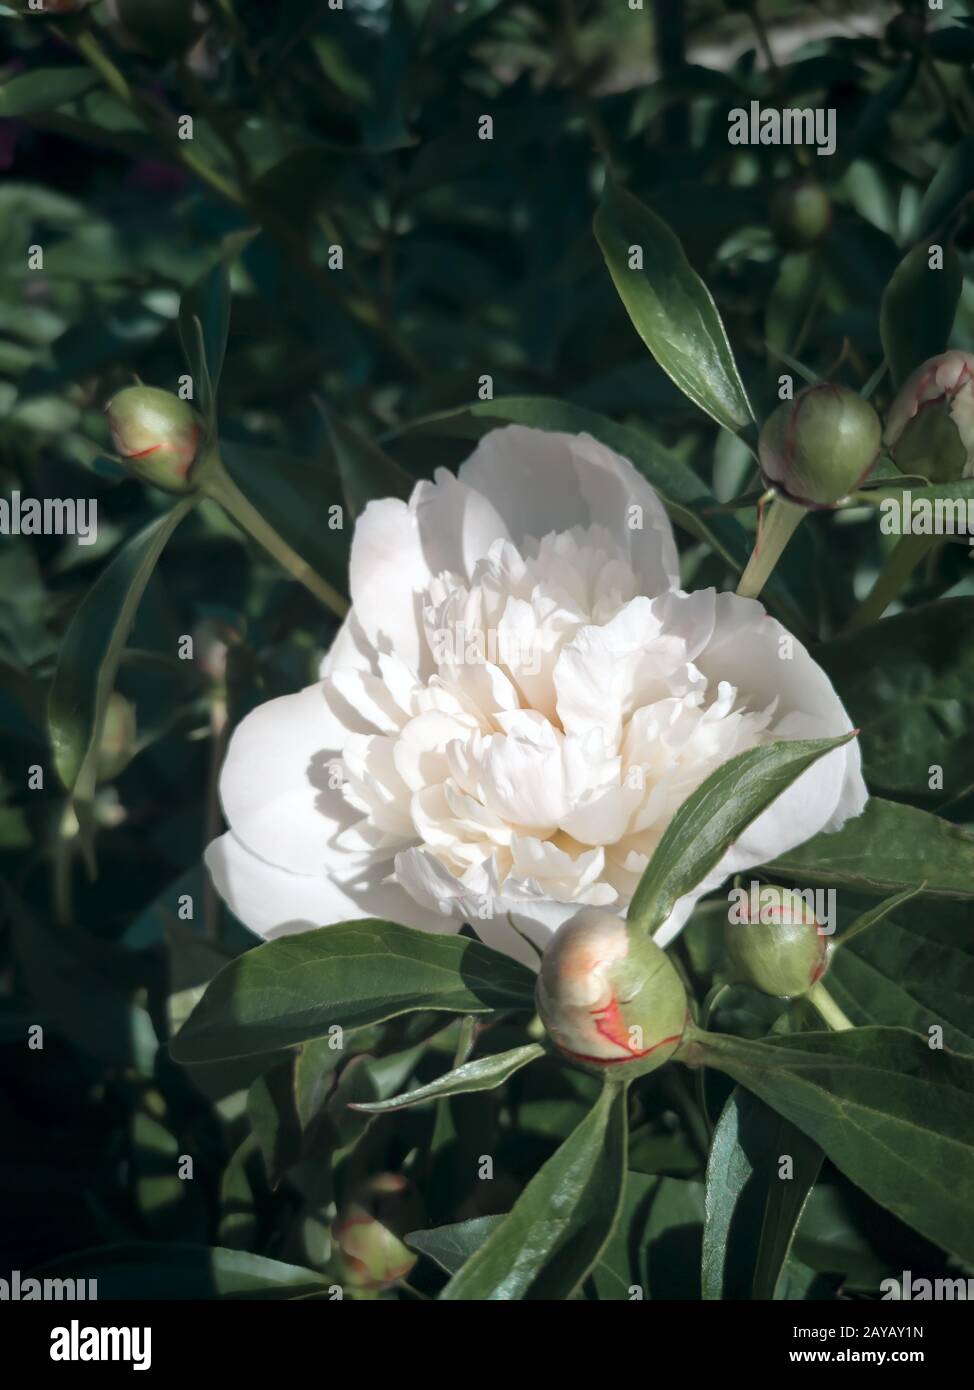 Beautiful white peony flower among green leaves Stock Photo